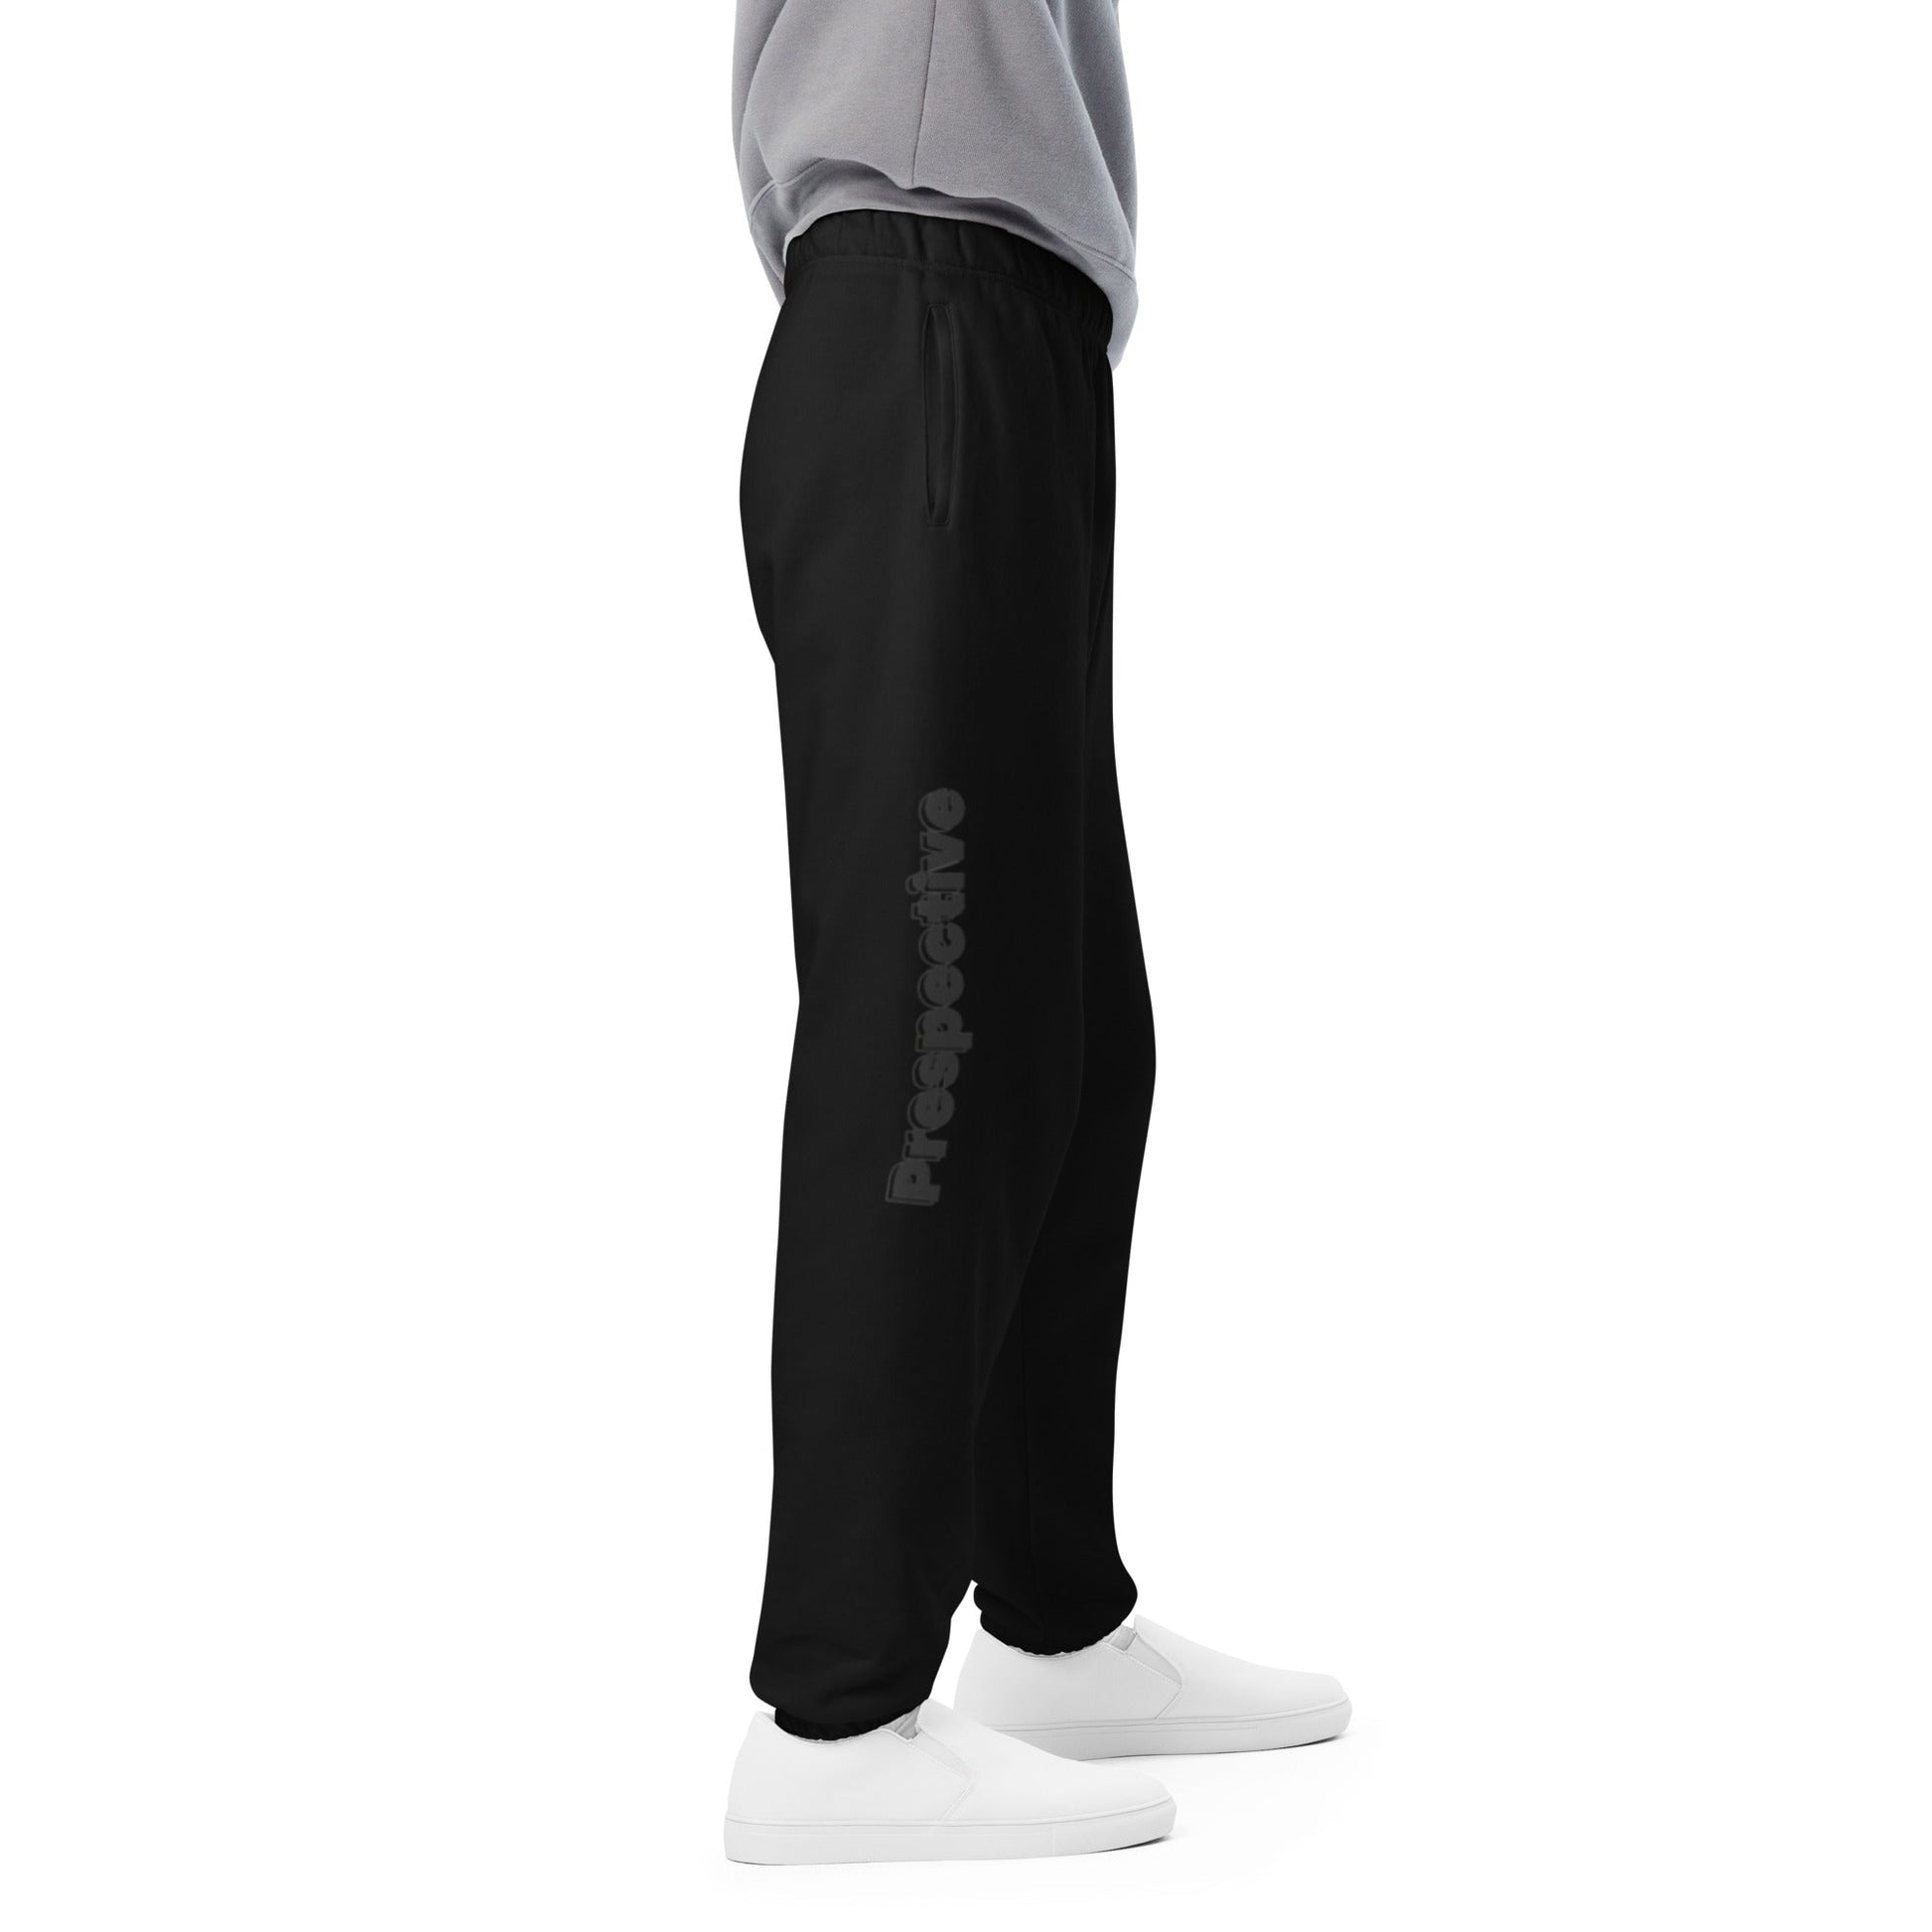 BlackMars comfort sweatpants - Premium  from BlackMars  - Just £25.50! Shop now at BlackMars 25.50BlackMars 